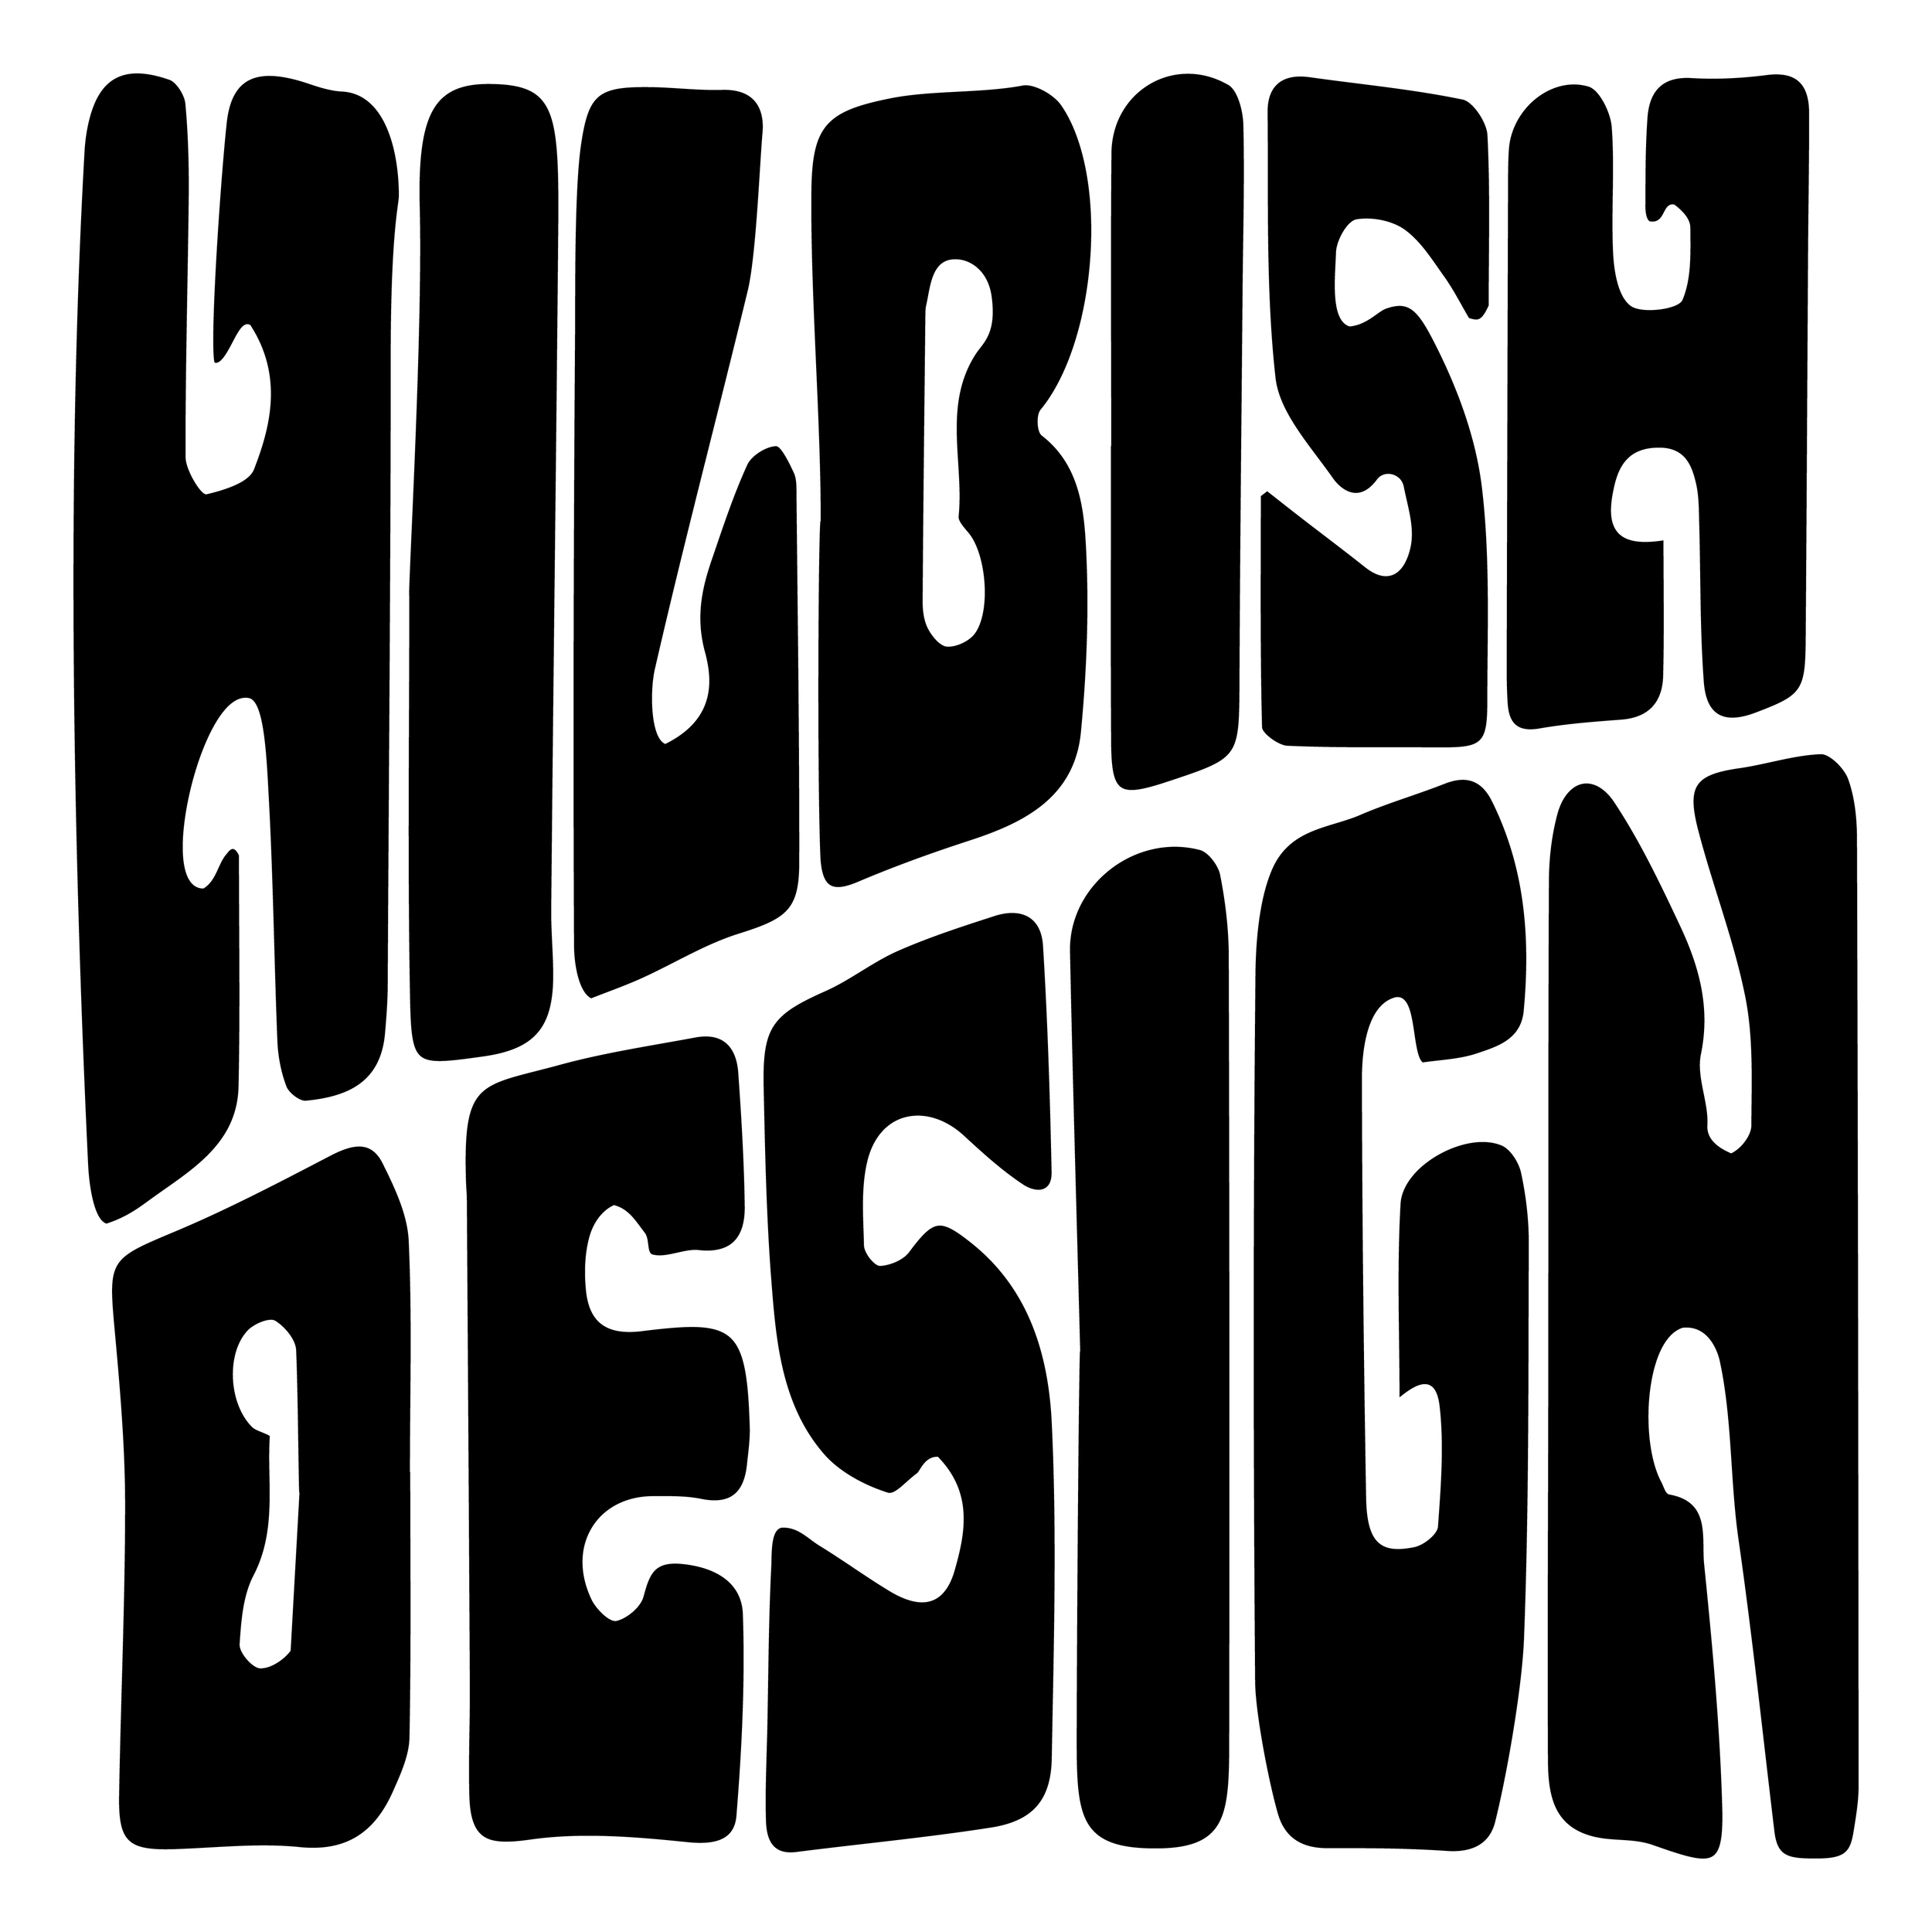 Hilbish Design